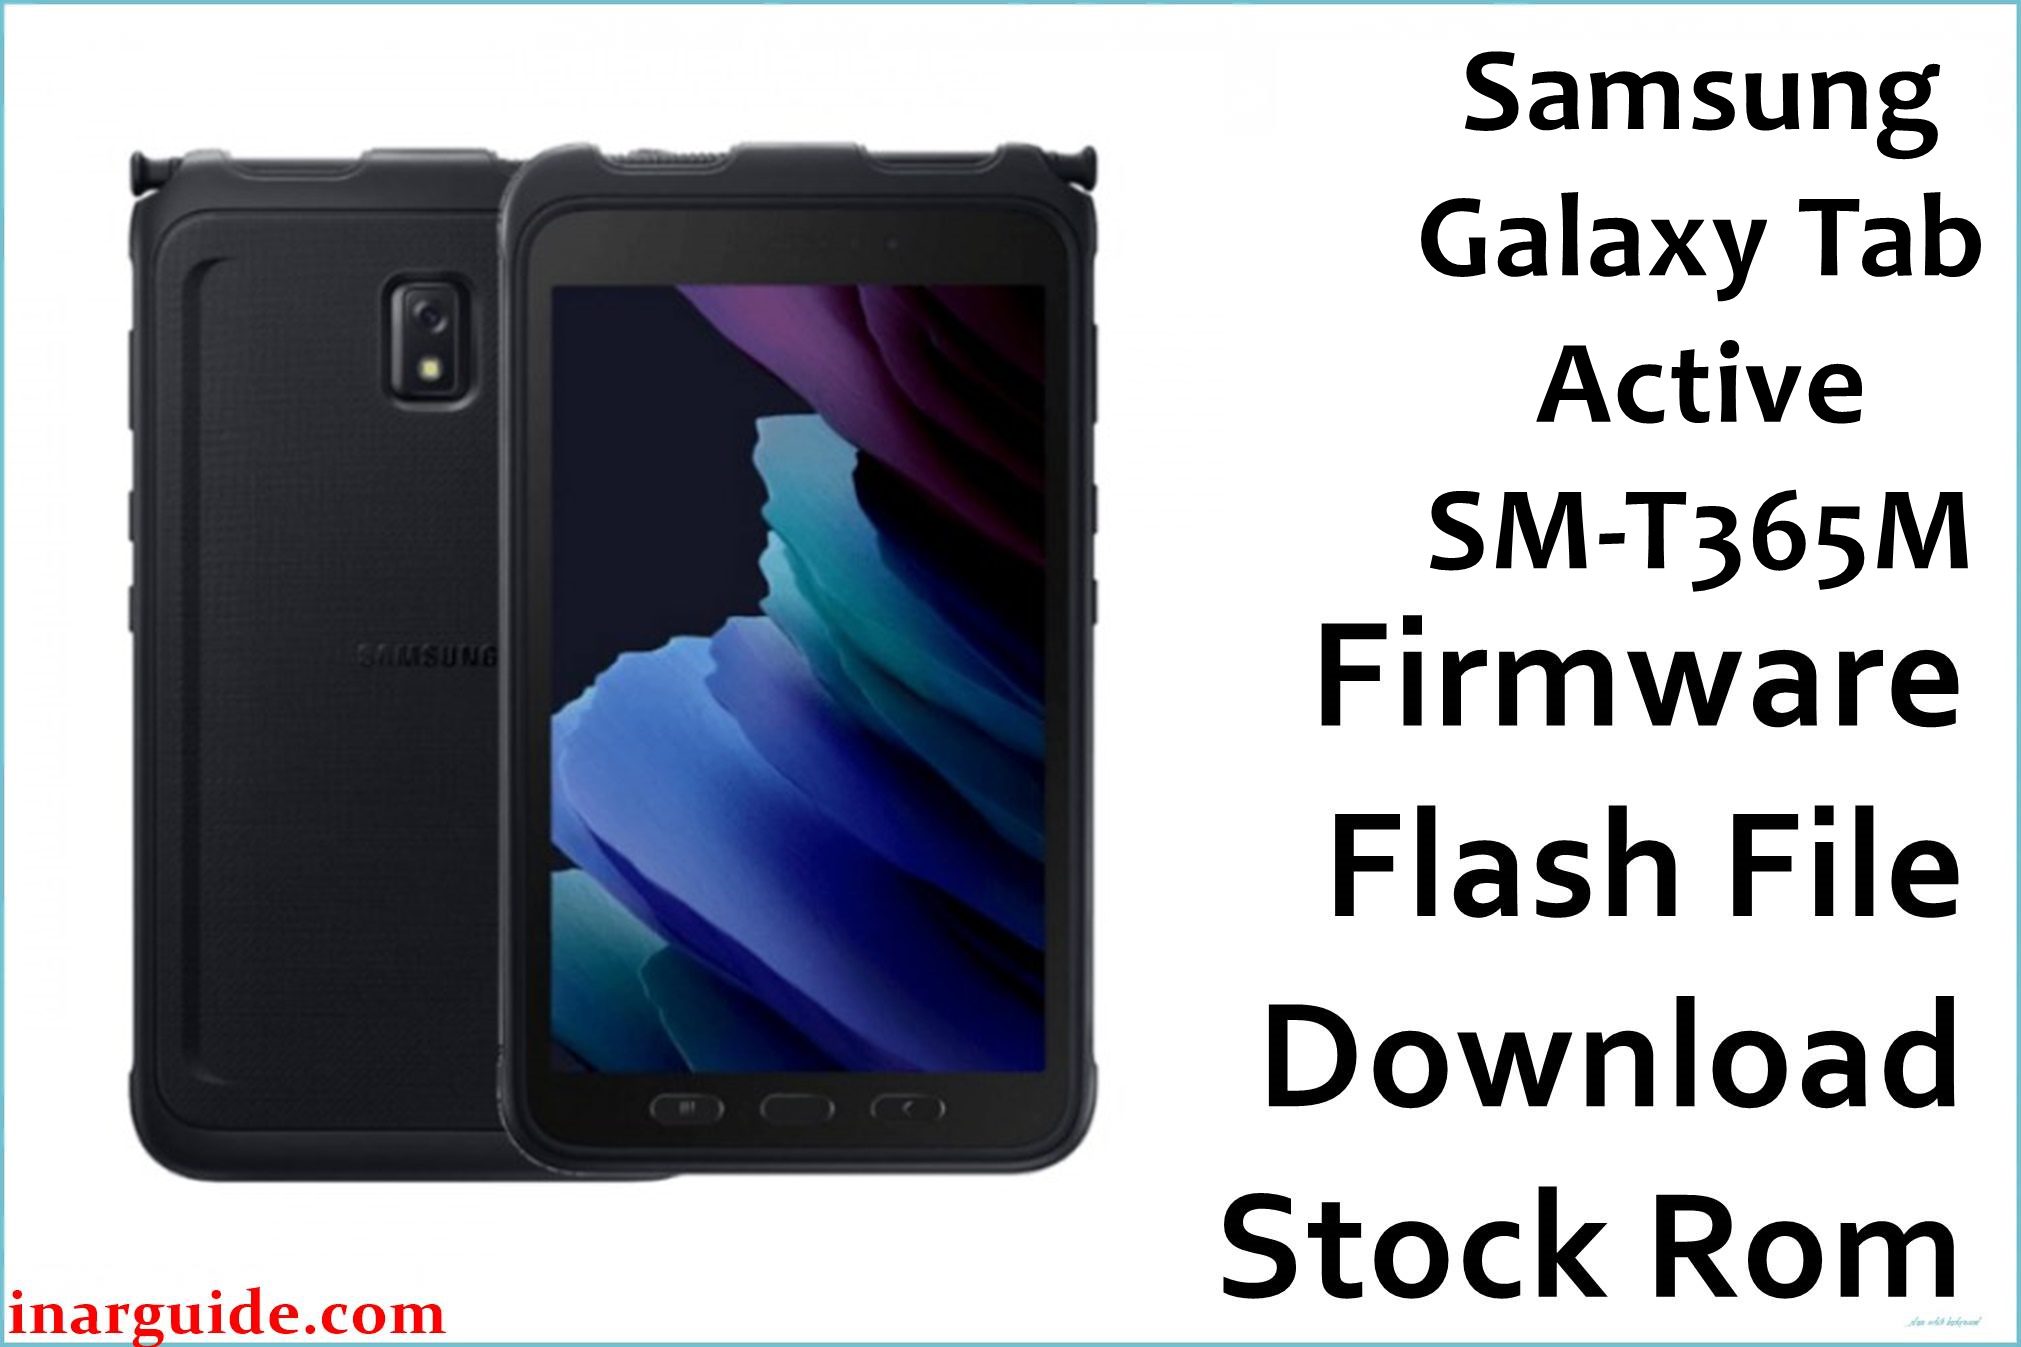 Samsung Galaxy Tab Active SM T365M